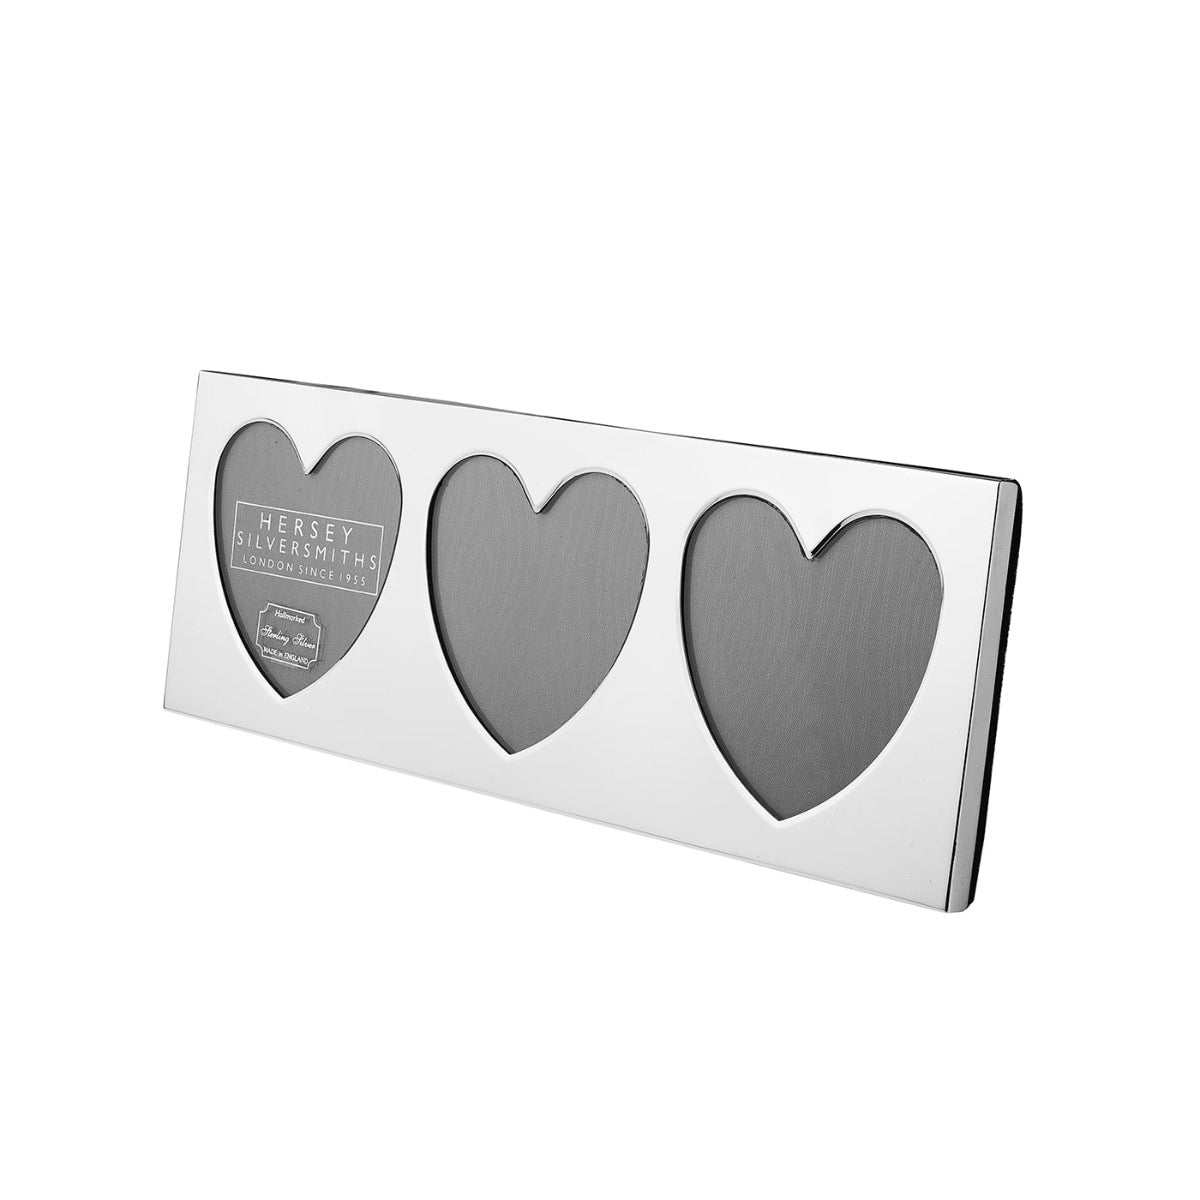 Silver Photograph Frame Heart | Hersey & Son Silversmiths